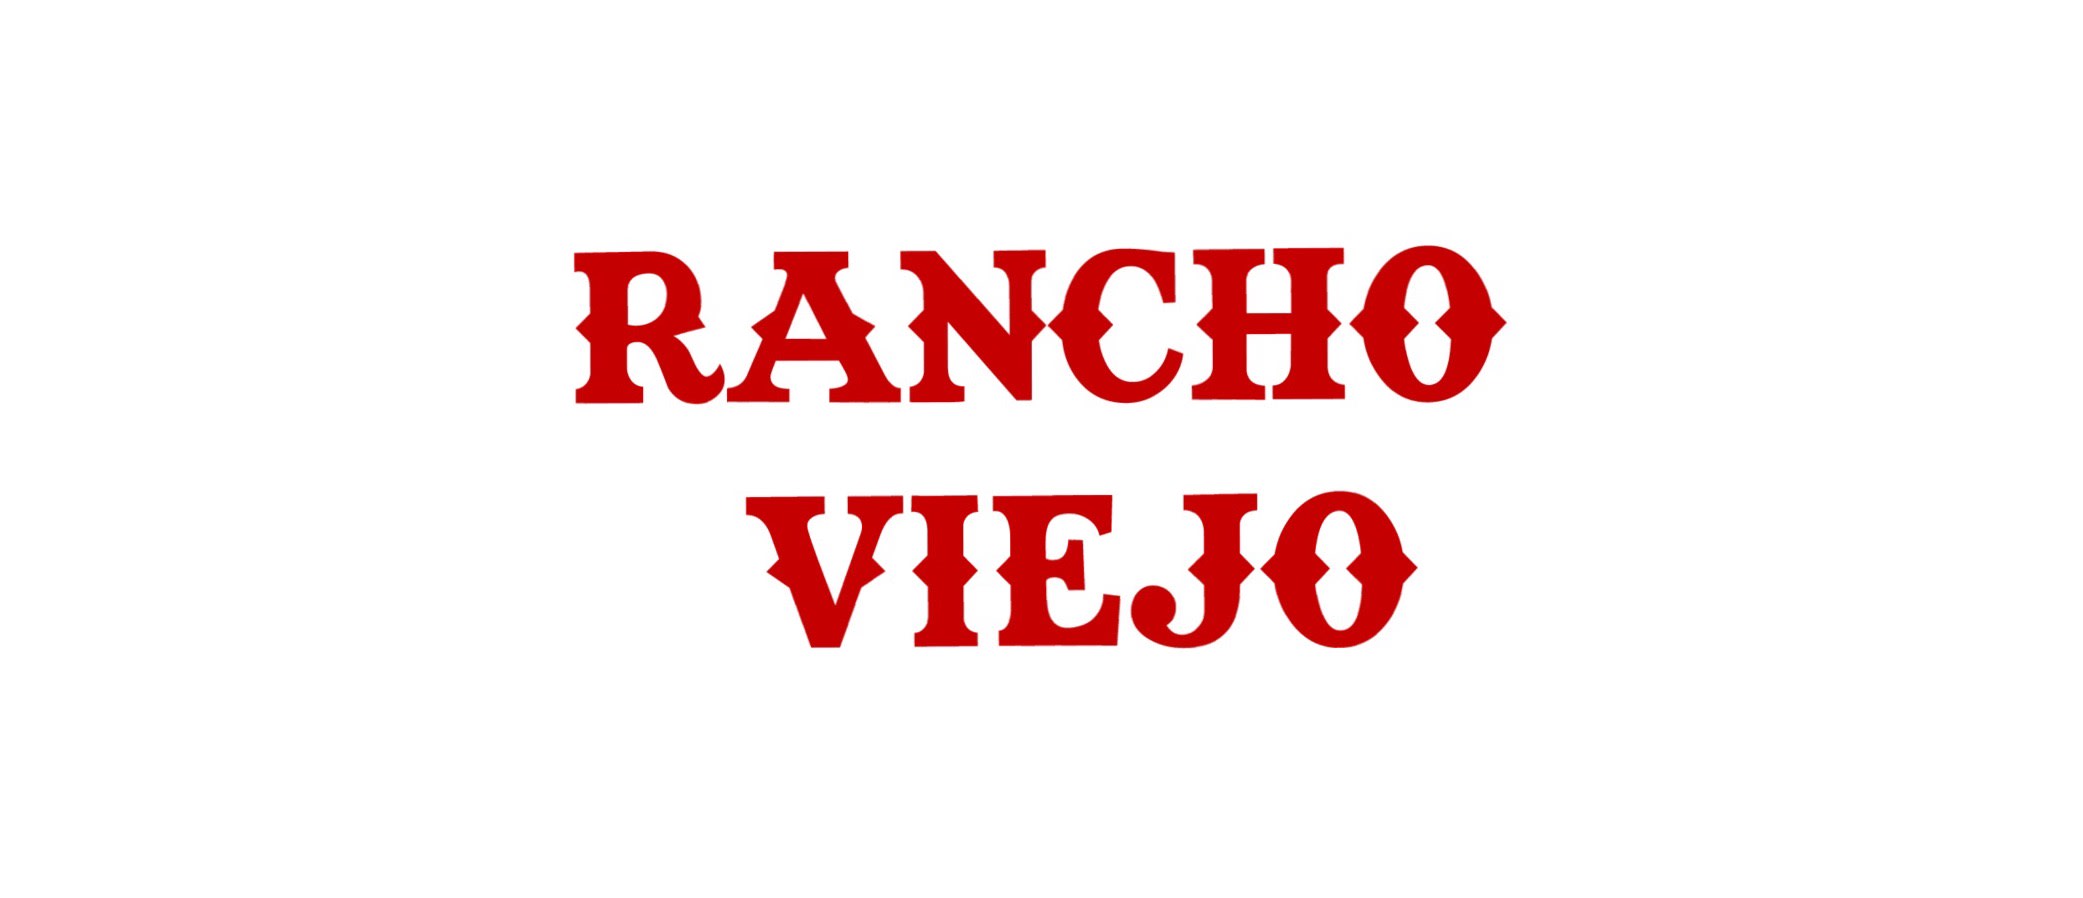 Rancho Viejo 